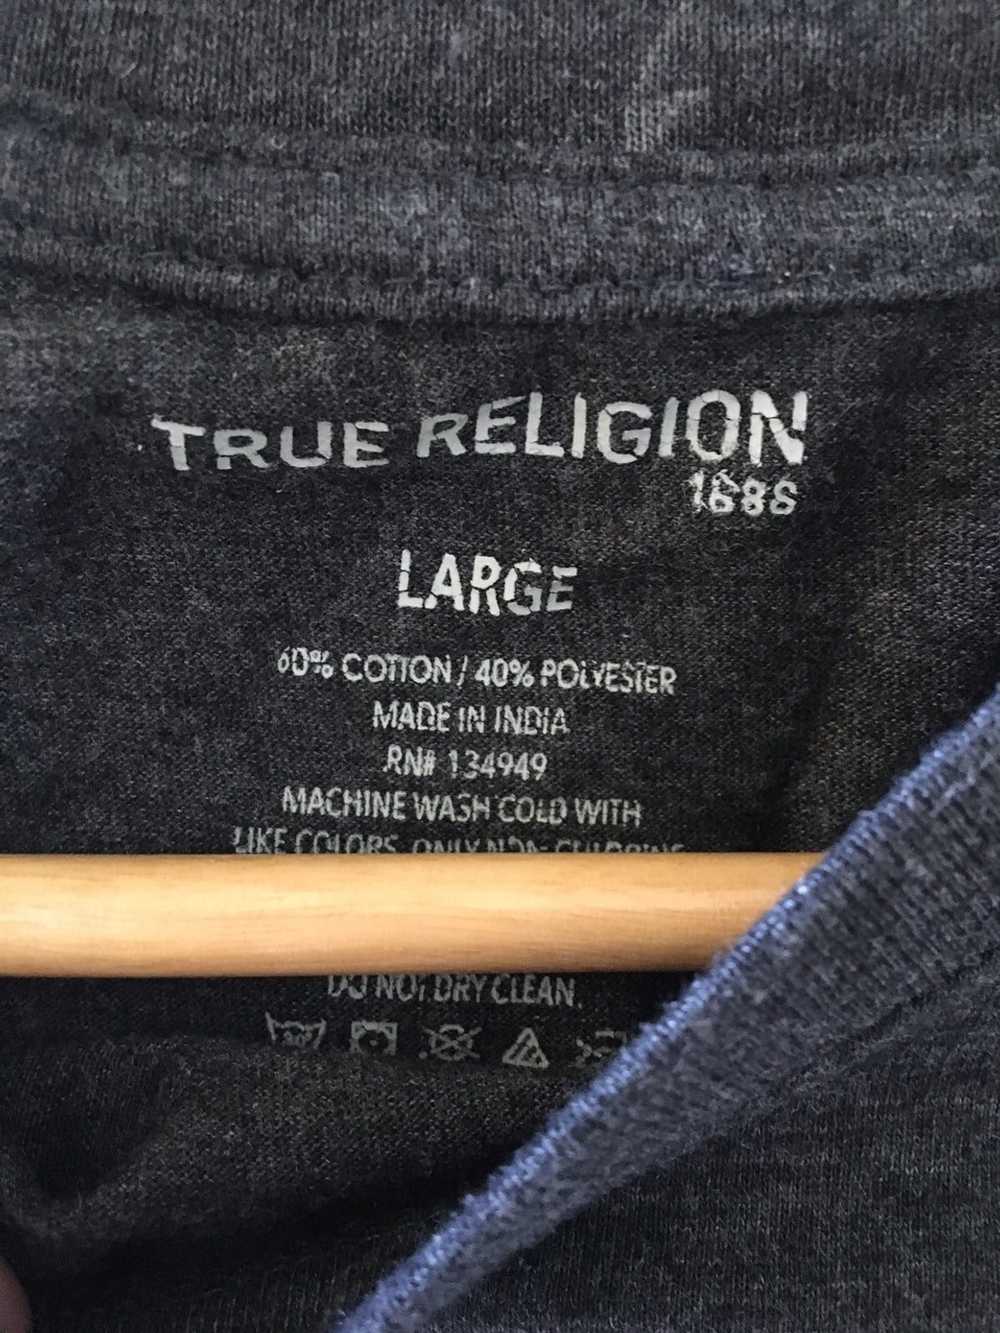 True Religion True Religion Tee - image 3